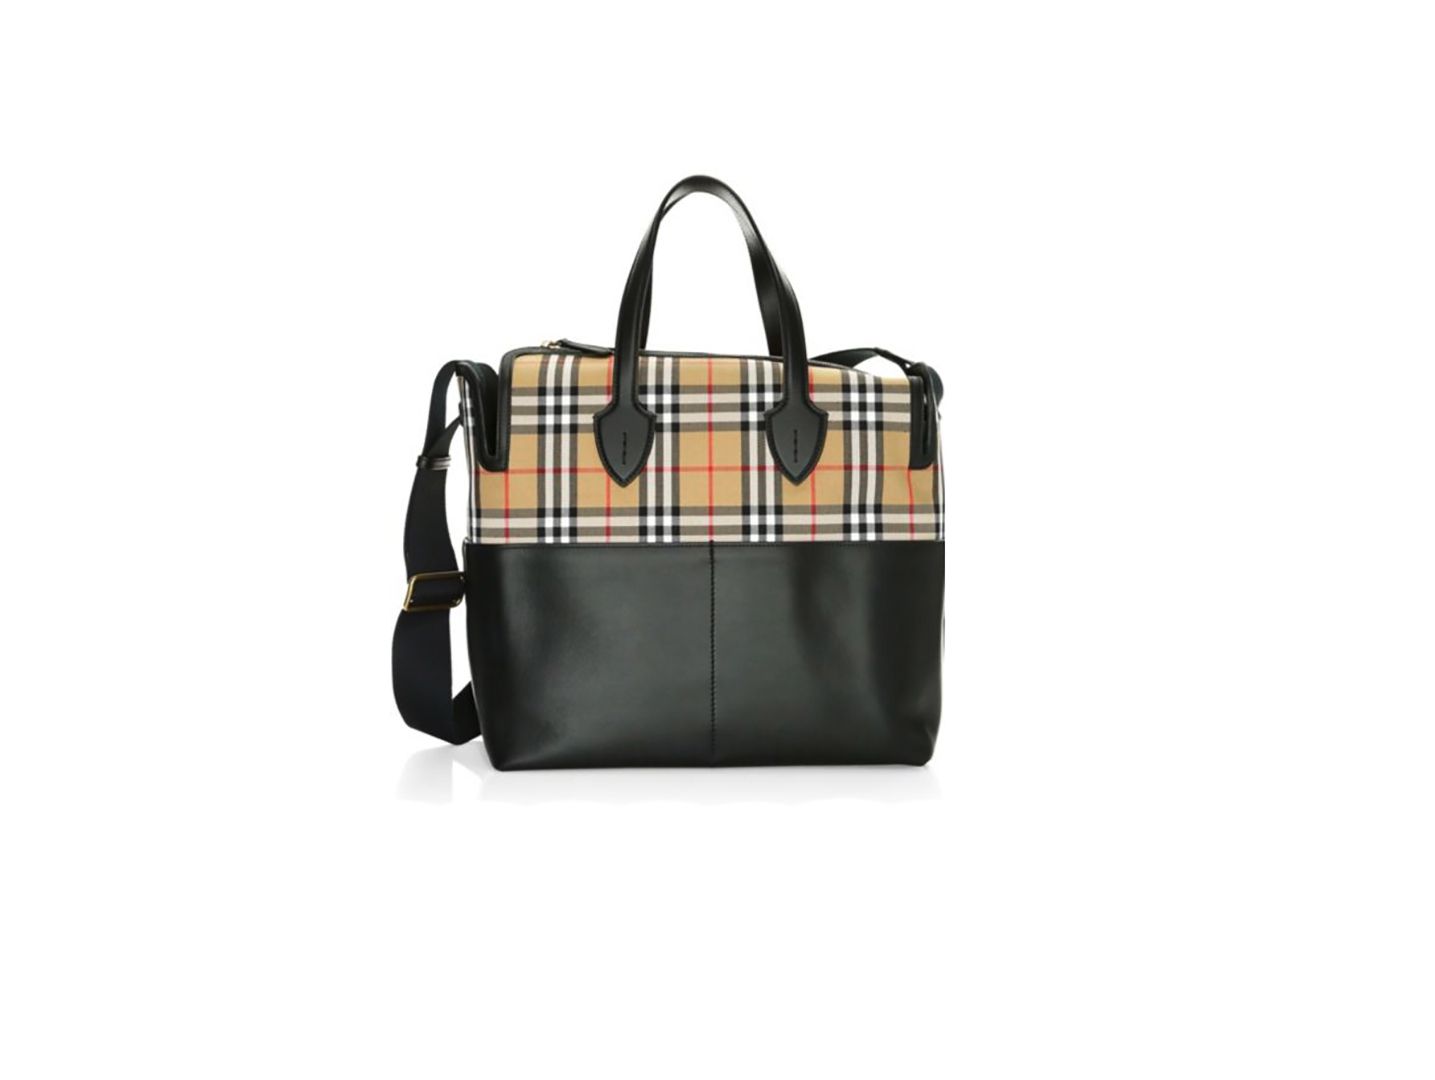 Nova Harley Manhattan Luxury Handbag Baby Bag SALE NOW ON !! Designer PU 